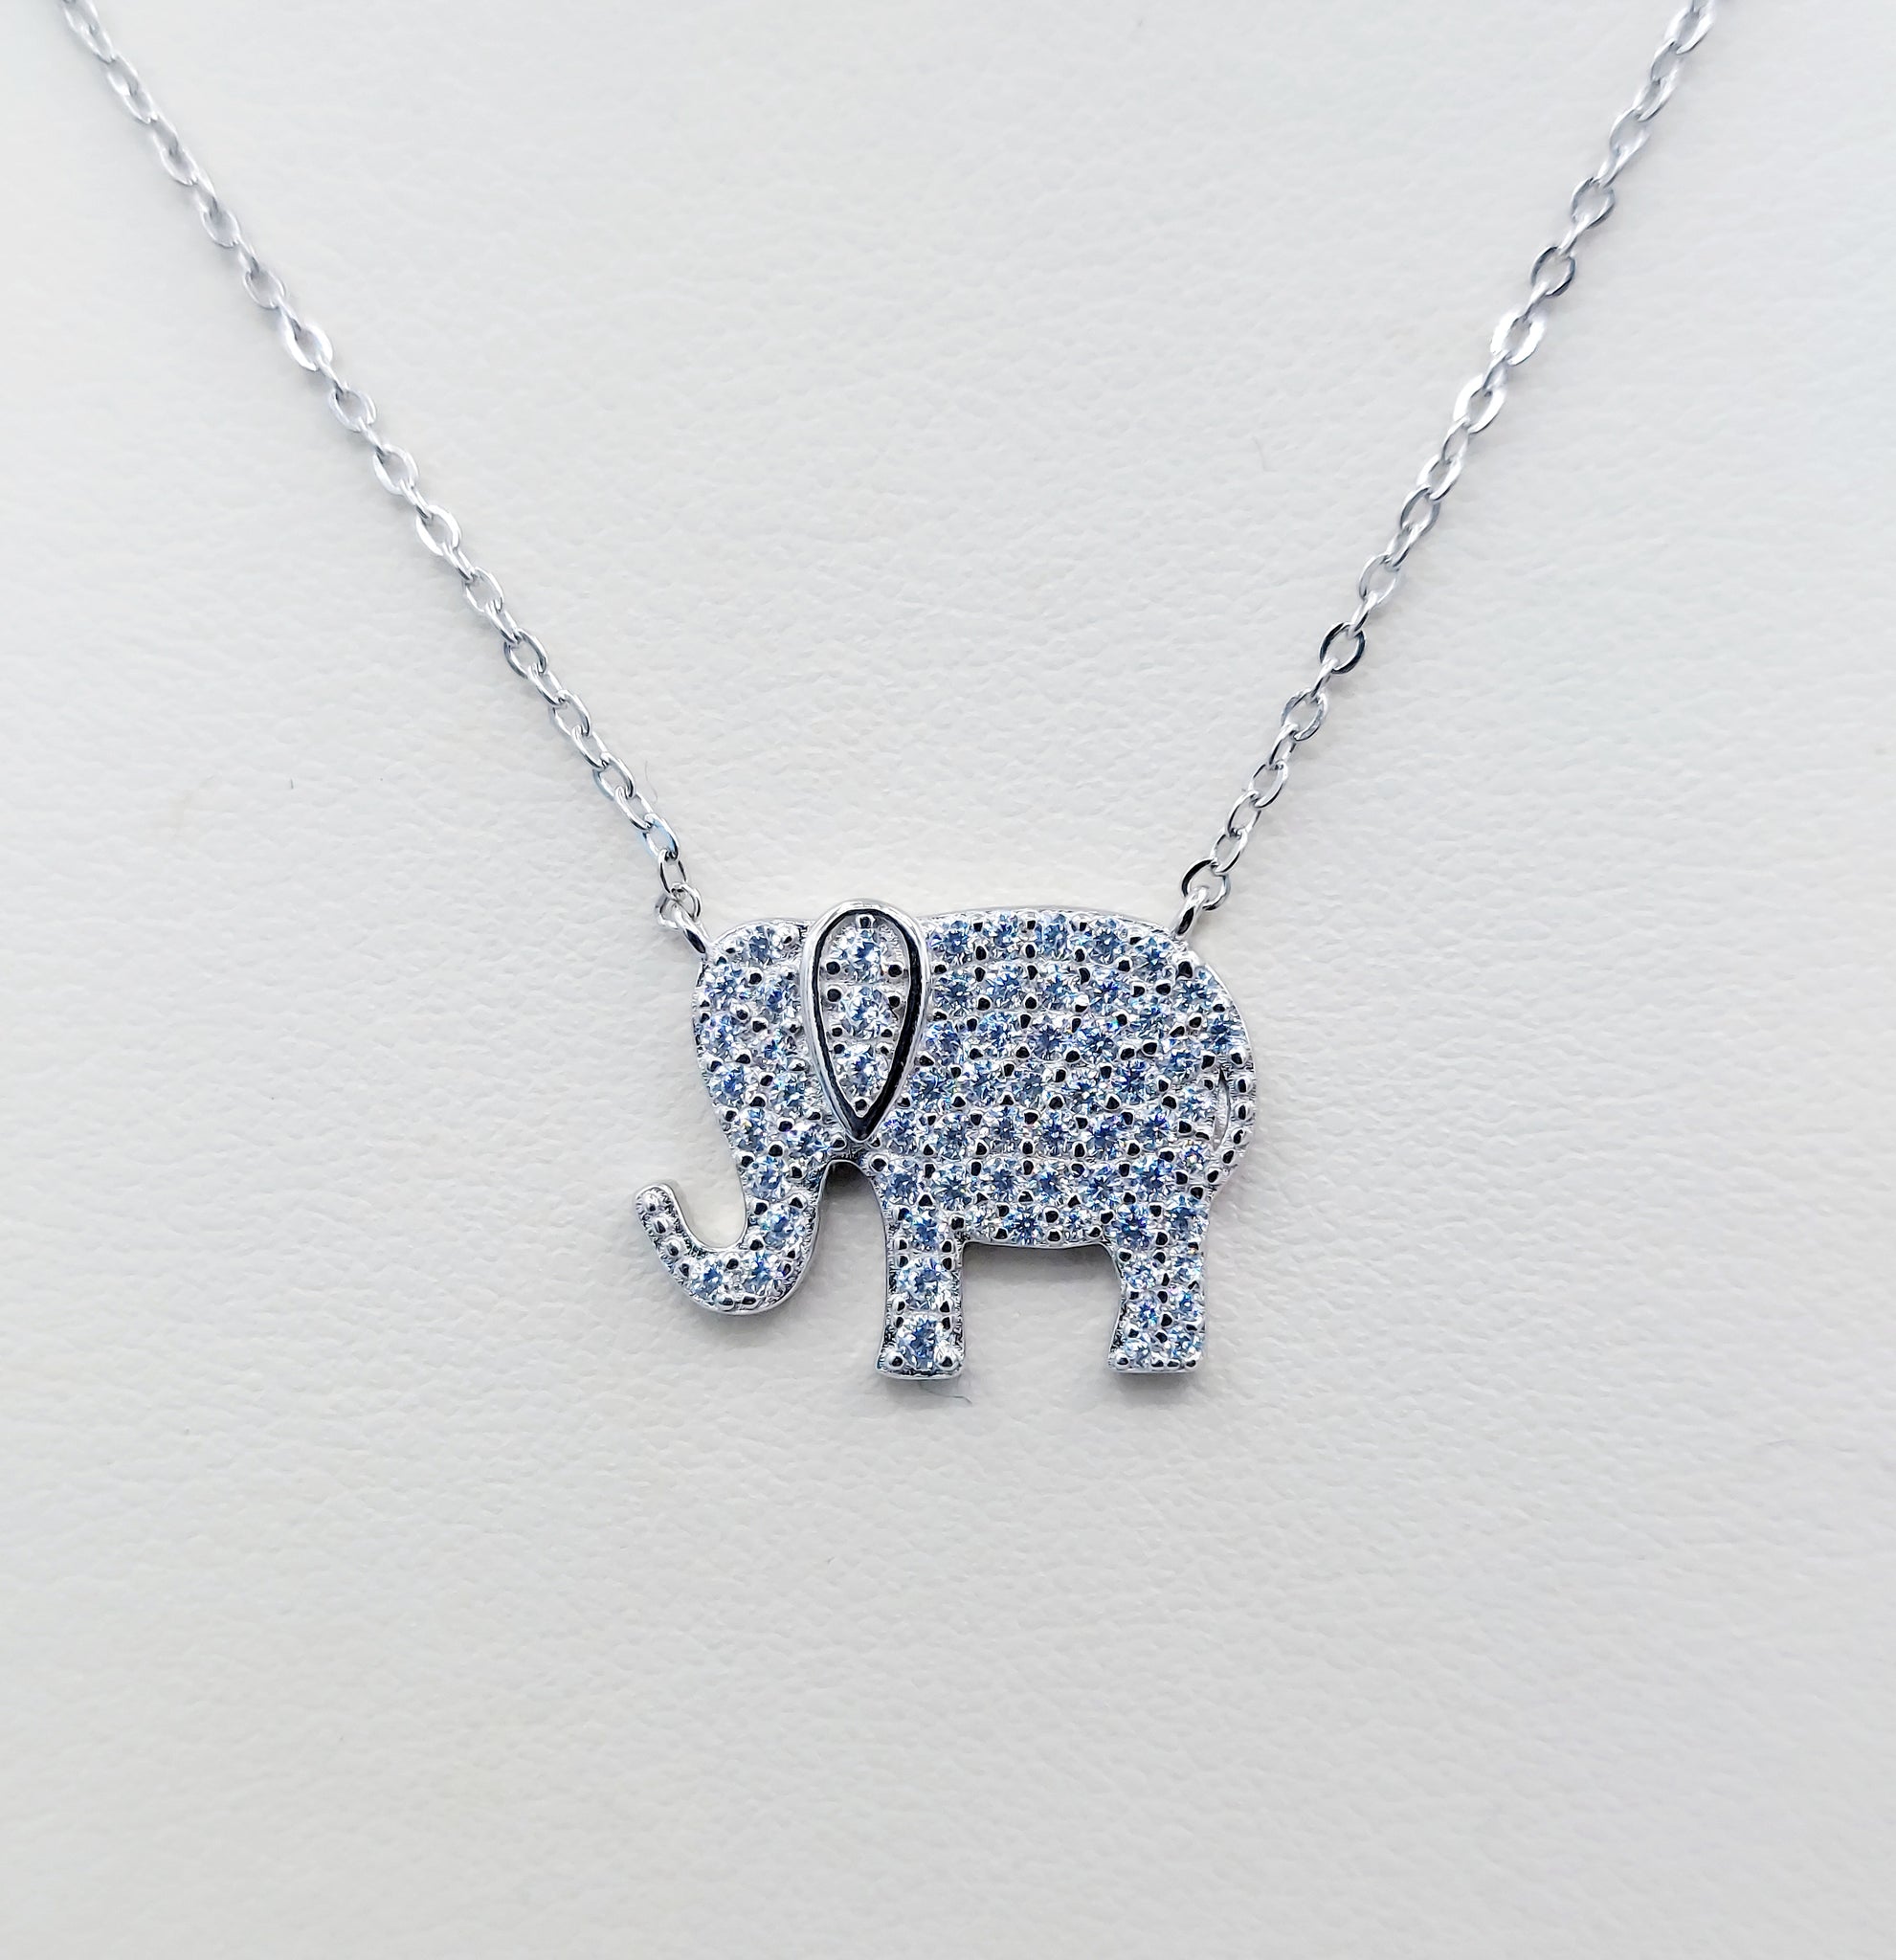 Silver Elephant Necklace | Elephant necklace silver, Teen jewelry trends,  Silver cat earrings